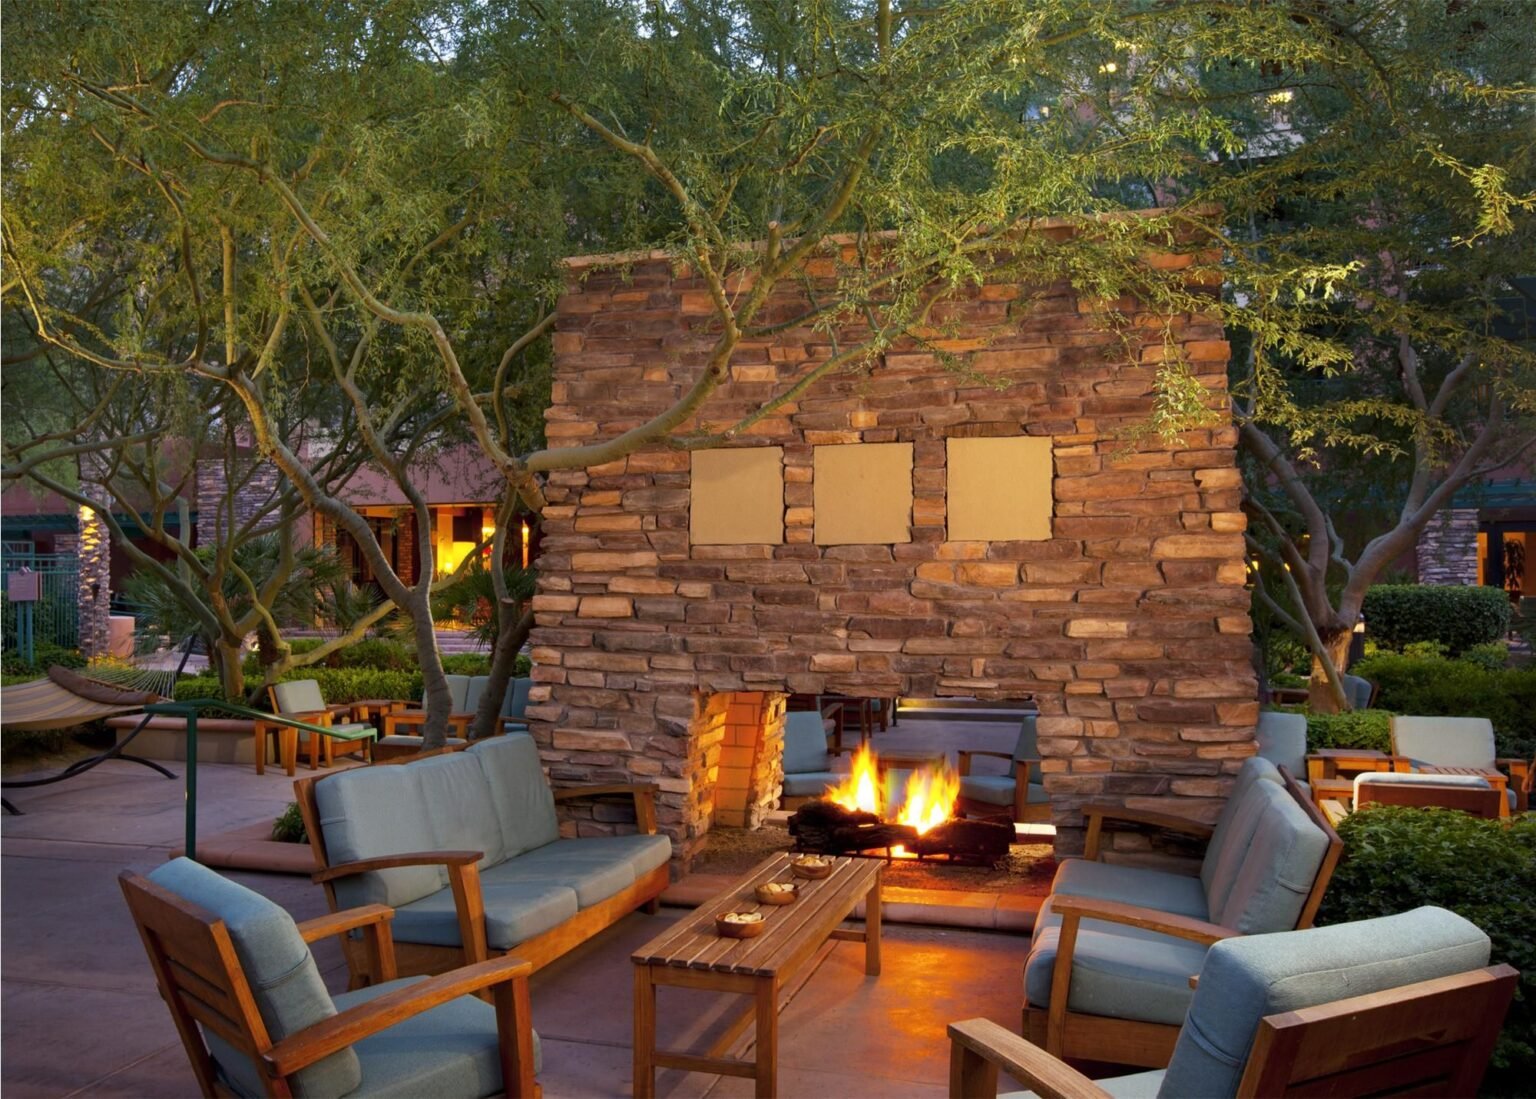 Kierland-fireplace-outdoor-1536x1099.jpg